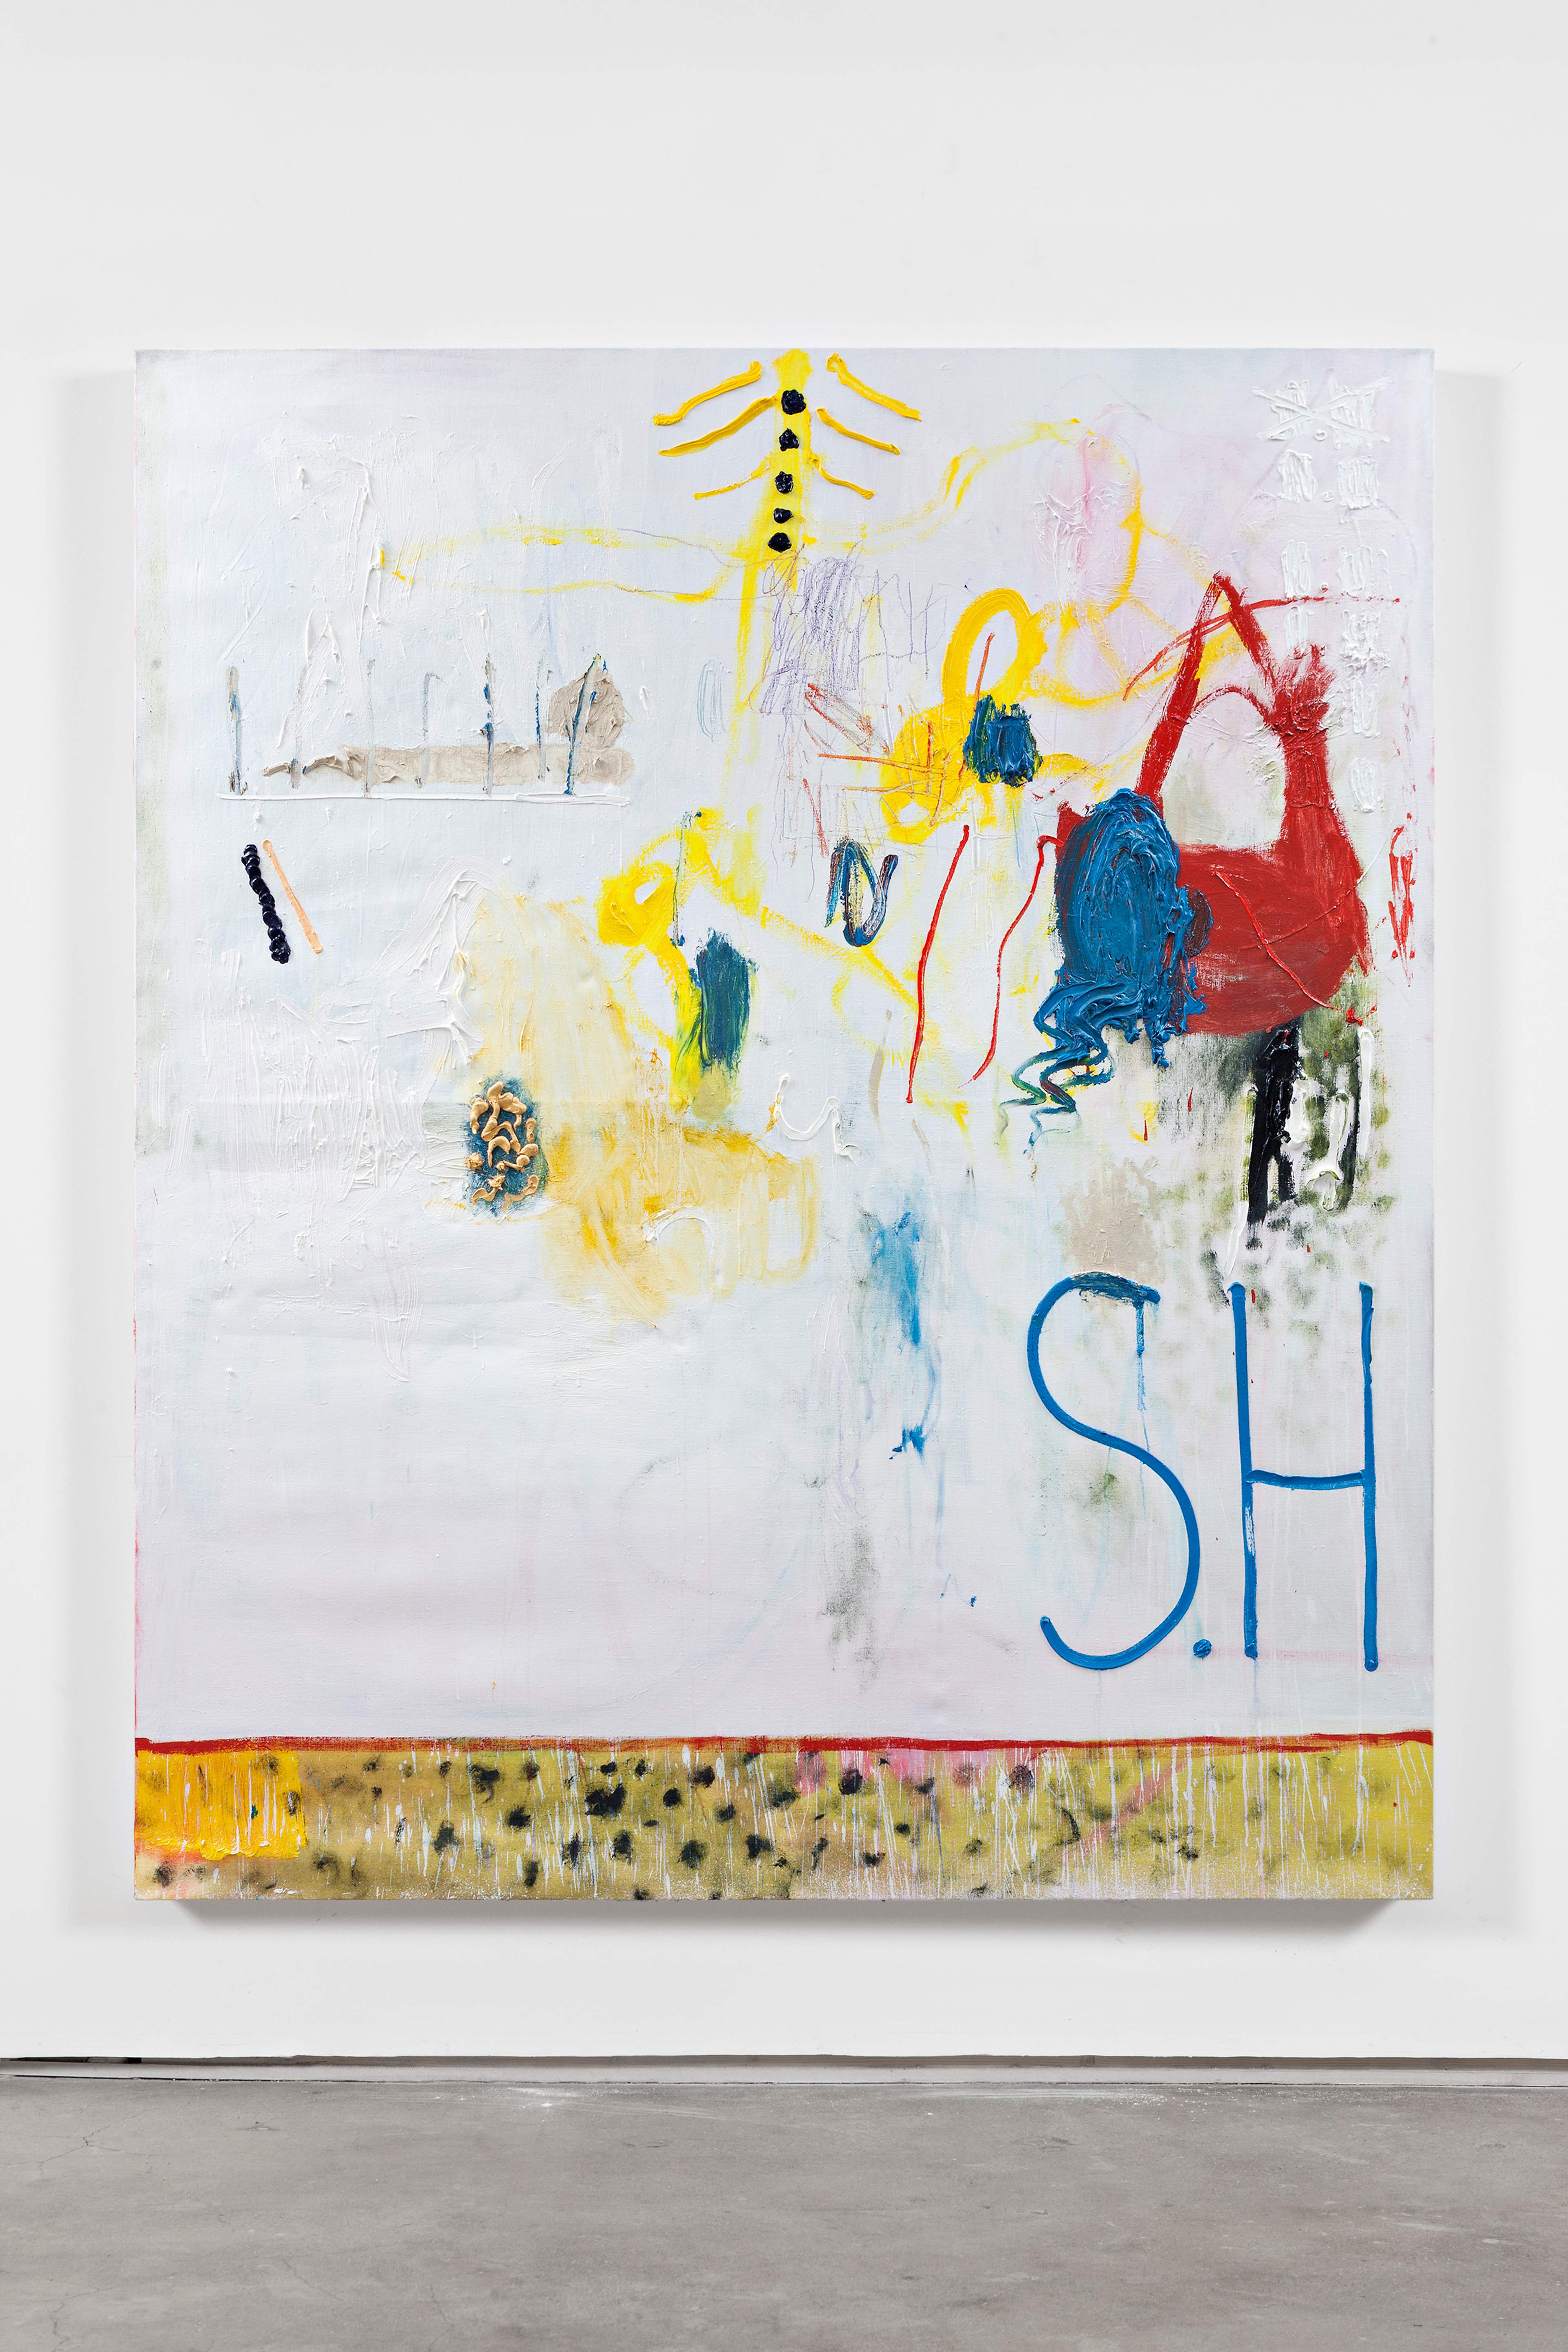 Sebastian Helling, Untitled (Affection), 2015, oil paint on linen, 220x185 cm